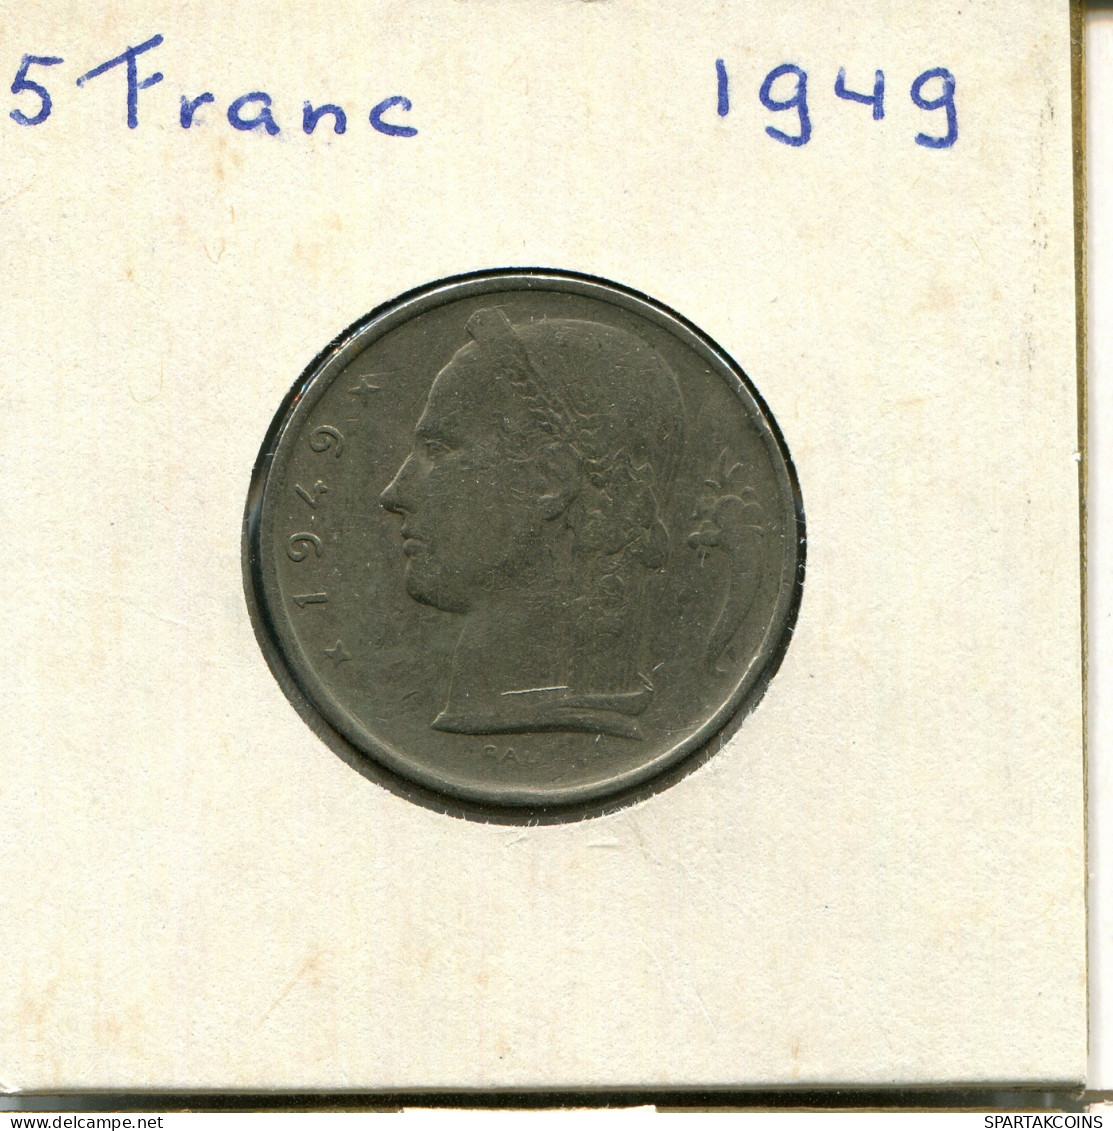 5 FRANCS 1949 DUTCH Text BELGIEN BELGIUM Münze #AW877.D - 5 Franc